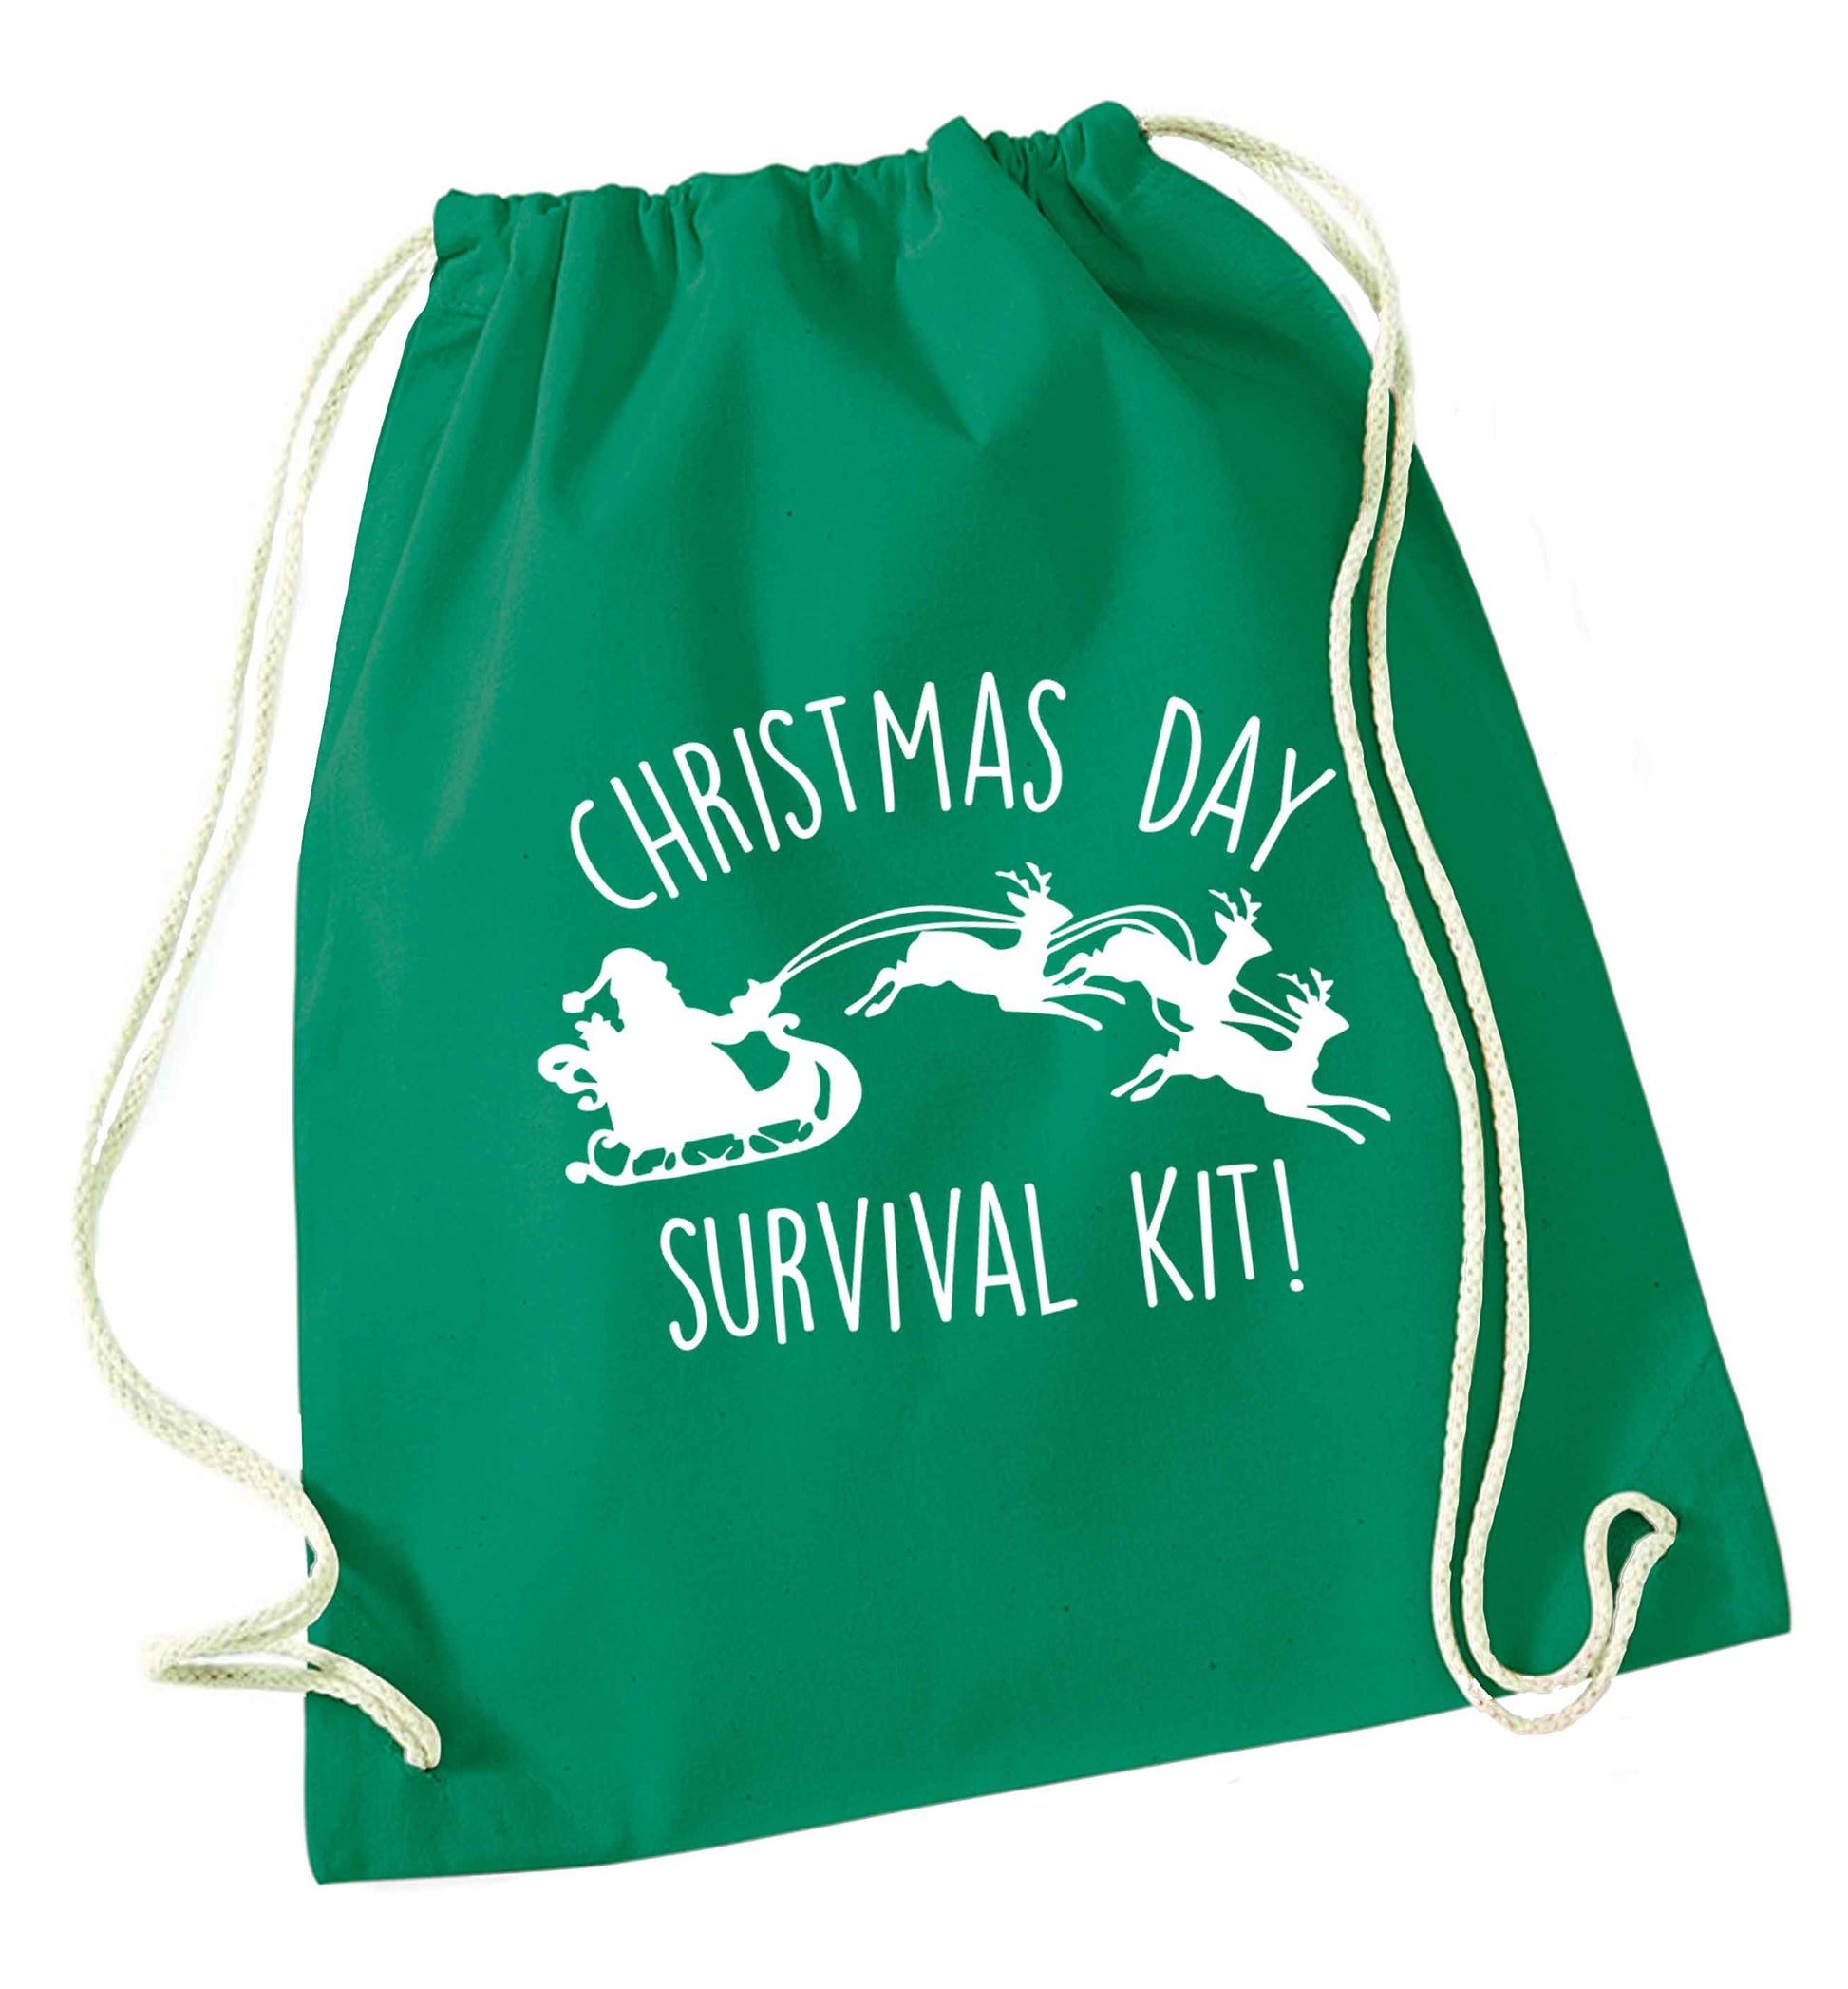 Christmas Day Survival Kitgreen drawstring bag